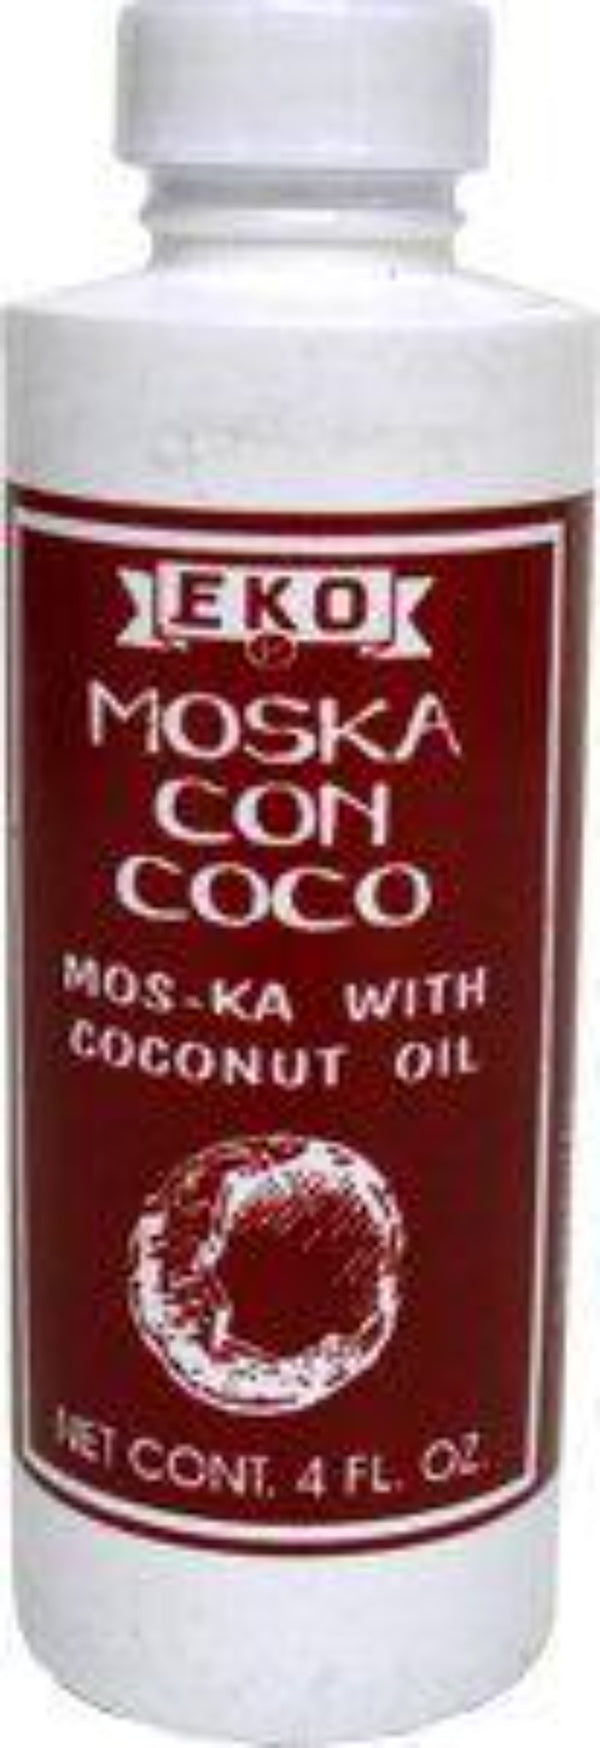 EKO Mos-ka + Coconut Oil 4 oz